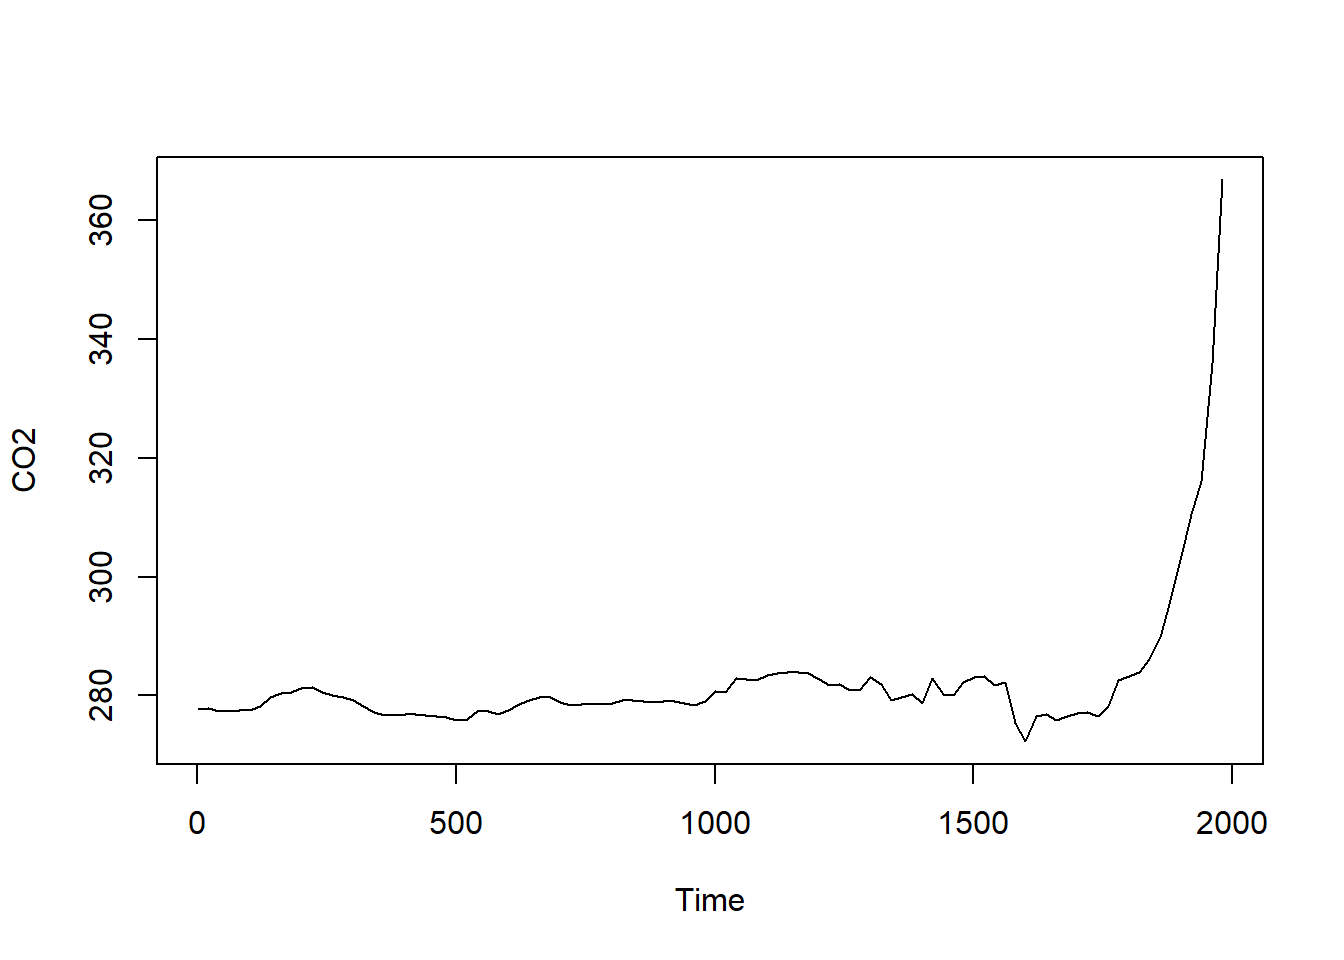 GHG CO2 time series